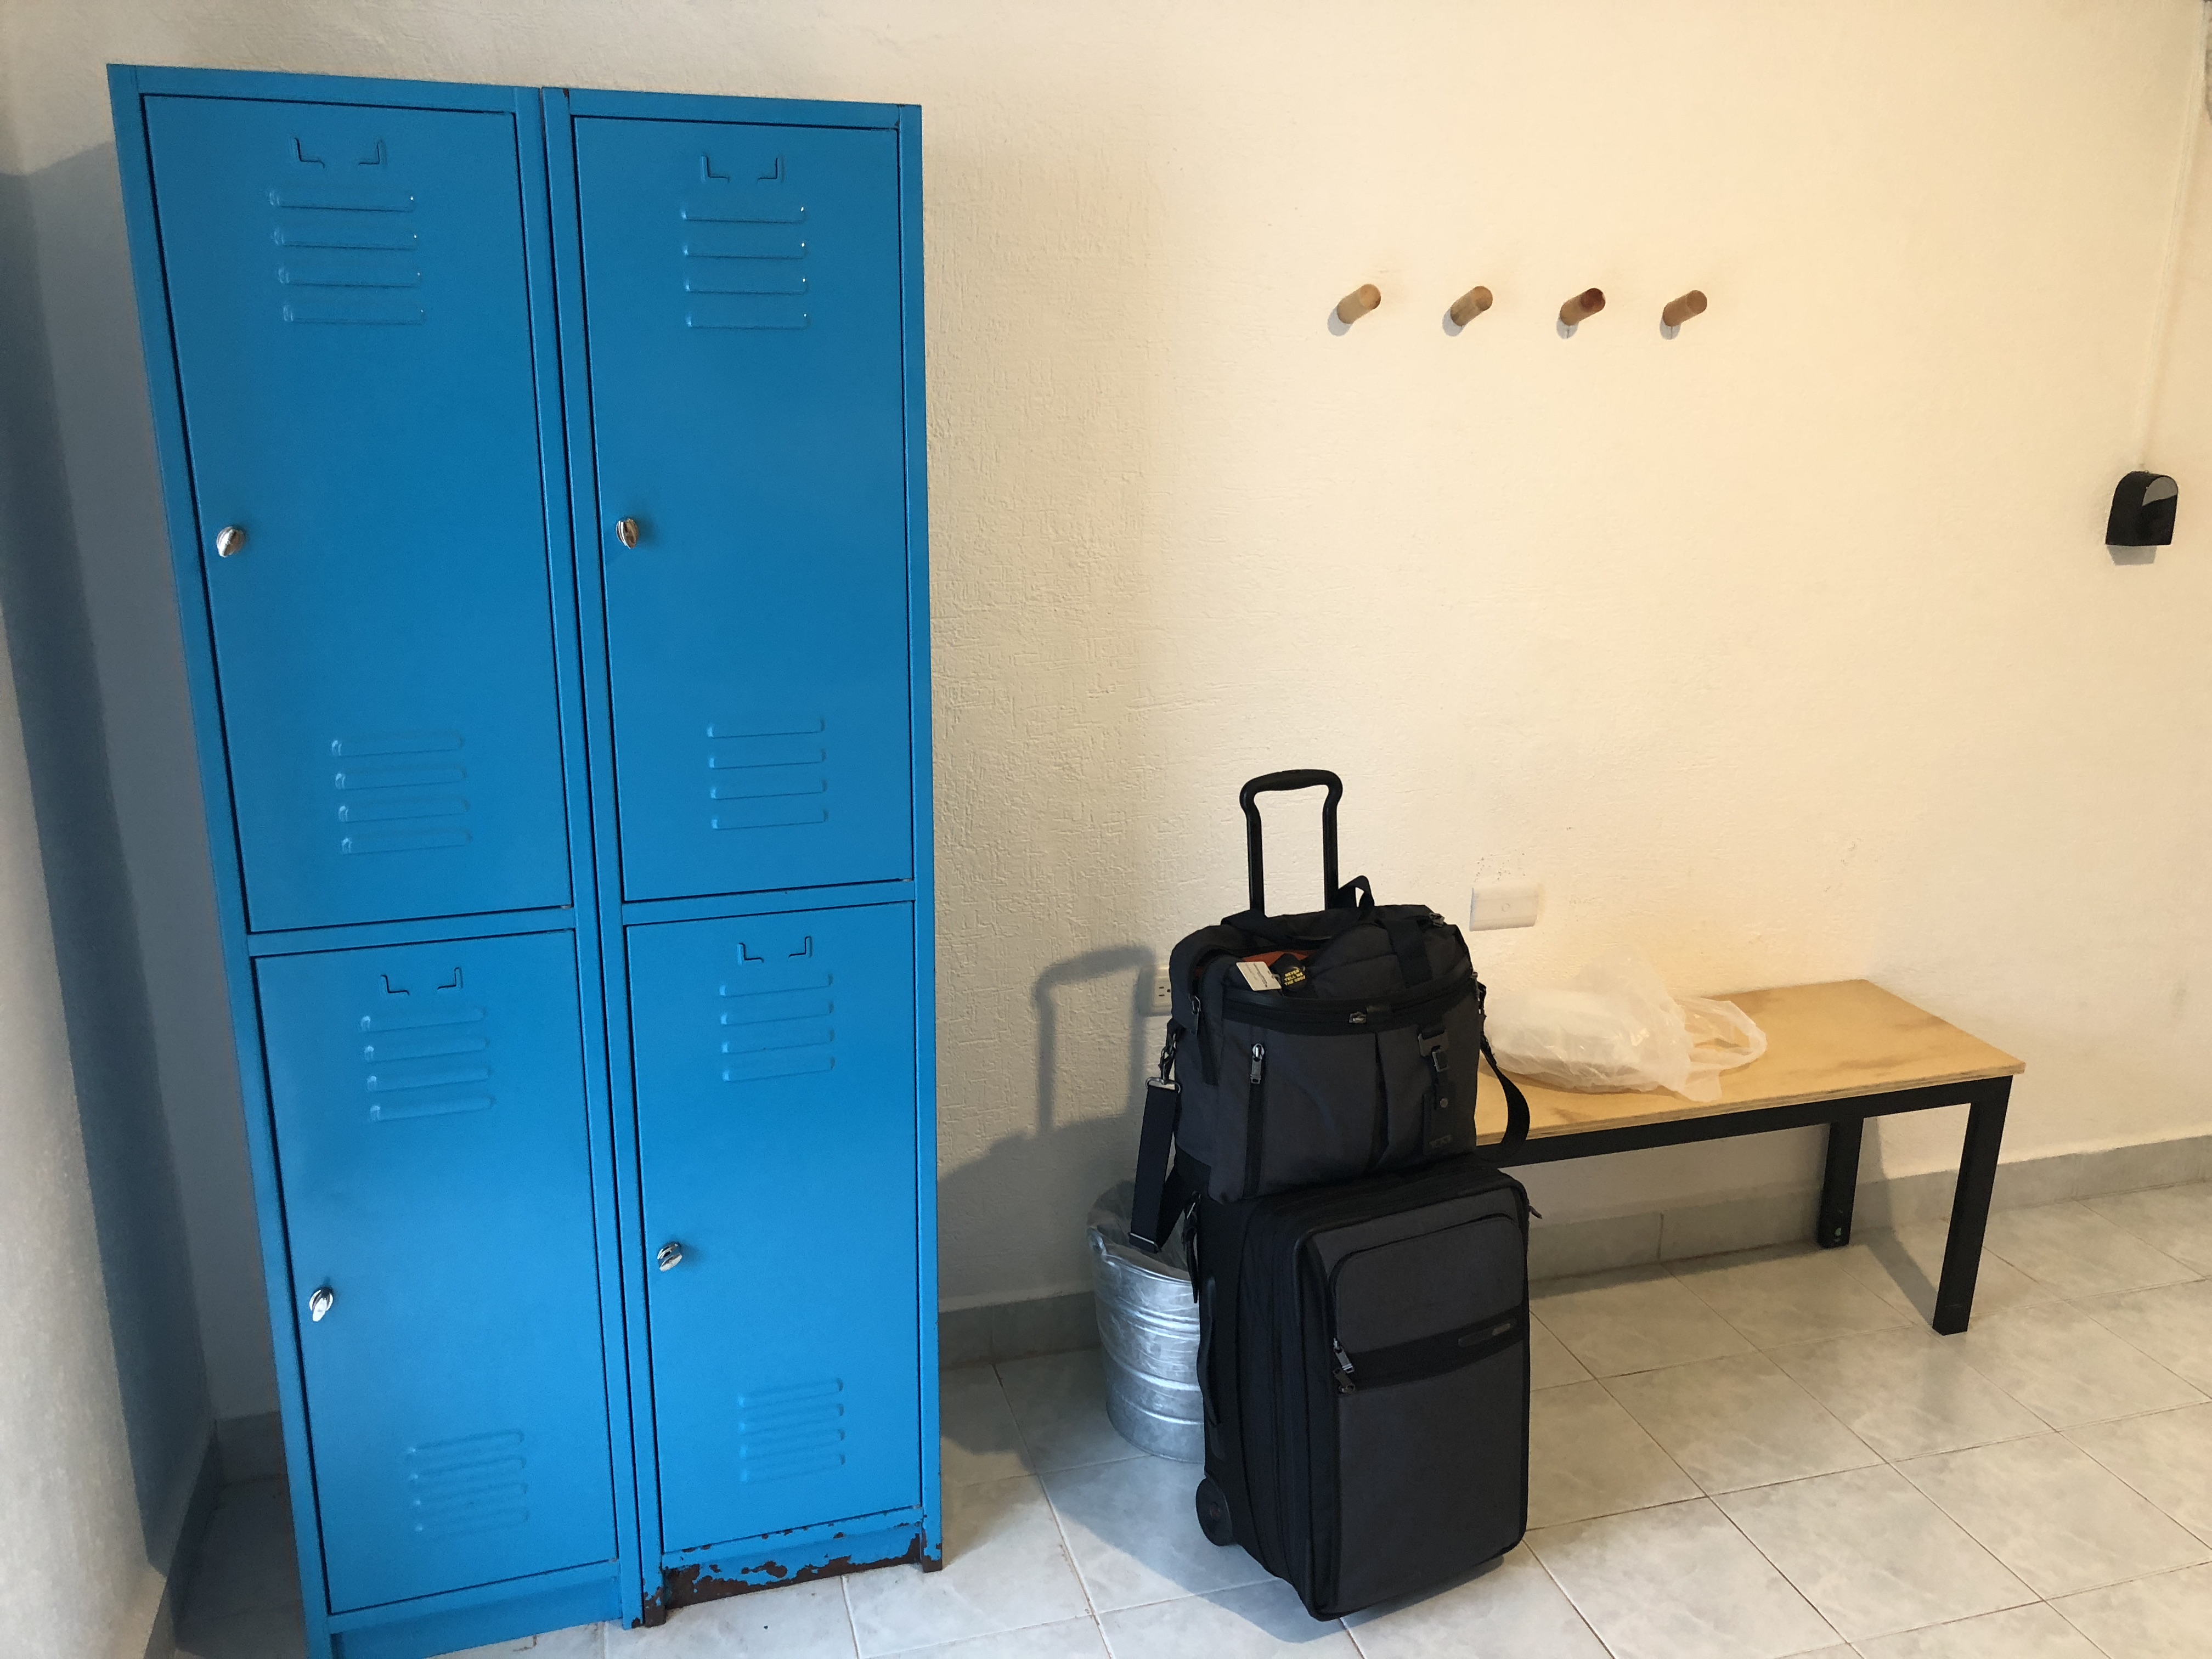 luggage next to a locker